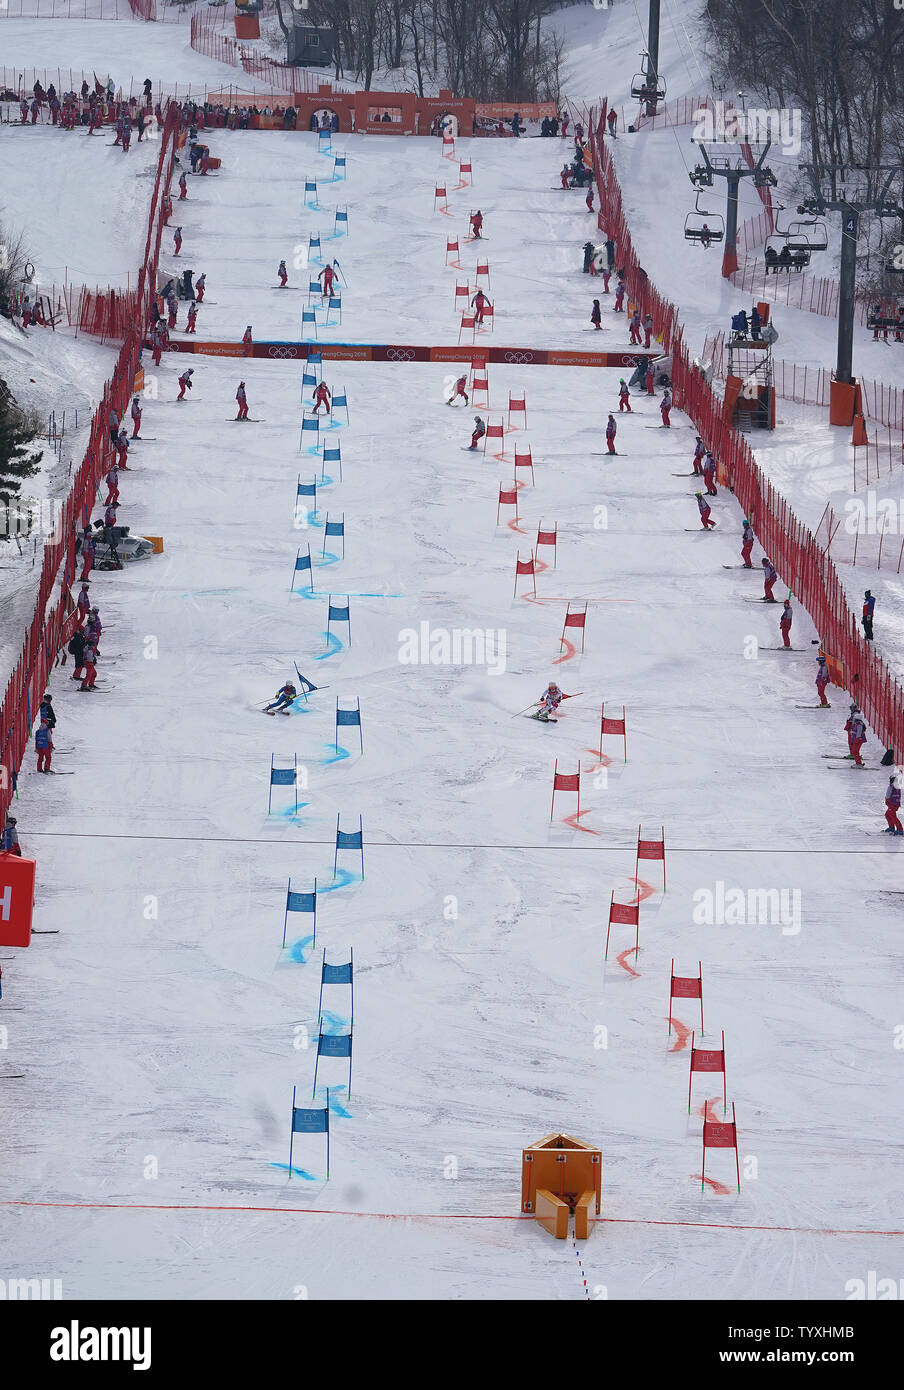 Tschechische Republik (R) Martina Dubovska gegen Chiara Costazza während der Alpine Team Fall konkurrieren auf dem Pyeongchang 2018 Winter Olympics in Pyeongchang, Südkorea, am 24. Februar 2018. Foto von Kevin Dietsch/UPI Stockfoto